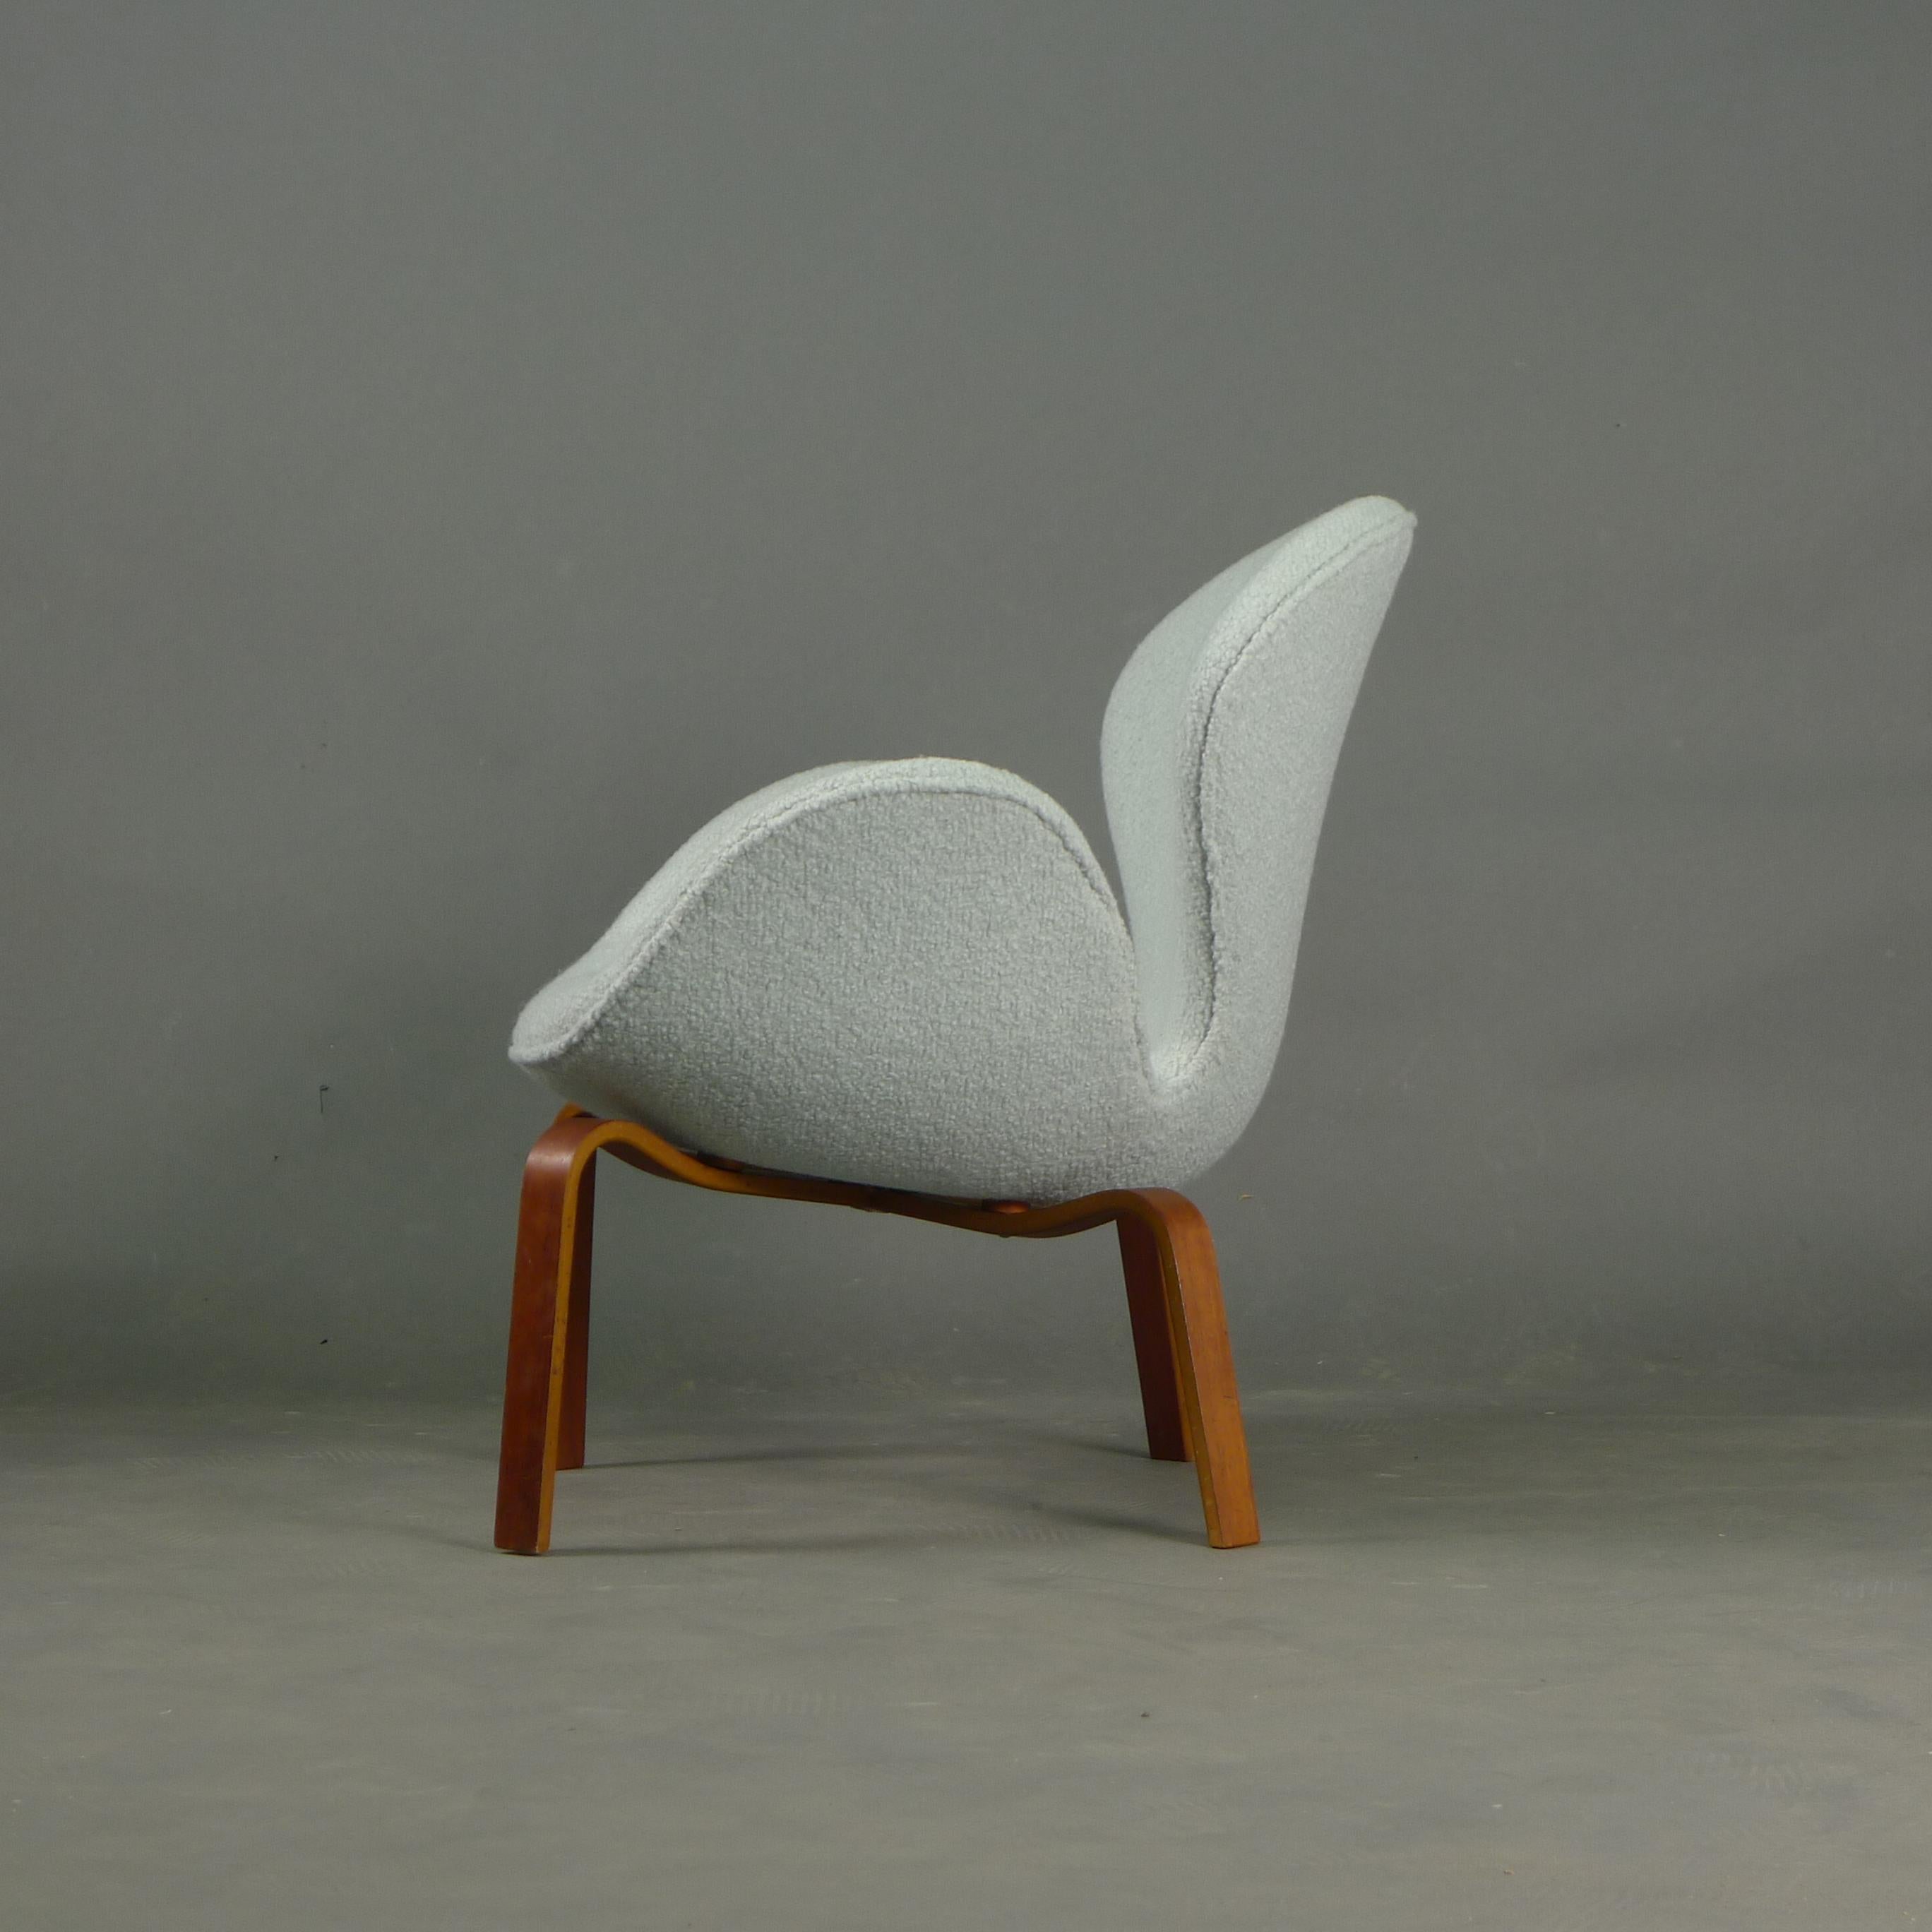 Arne Jacobsen, Swan Chair, rare version wood legs, 1965, by Fritz Hansen, FH4325 For Sale 1